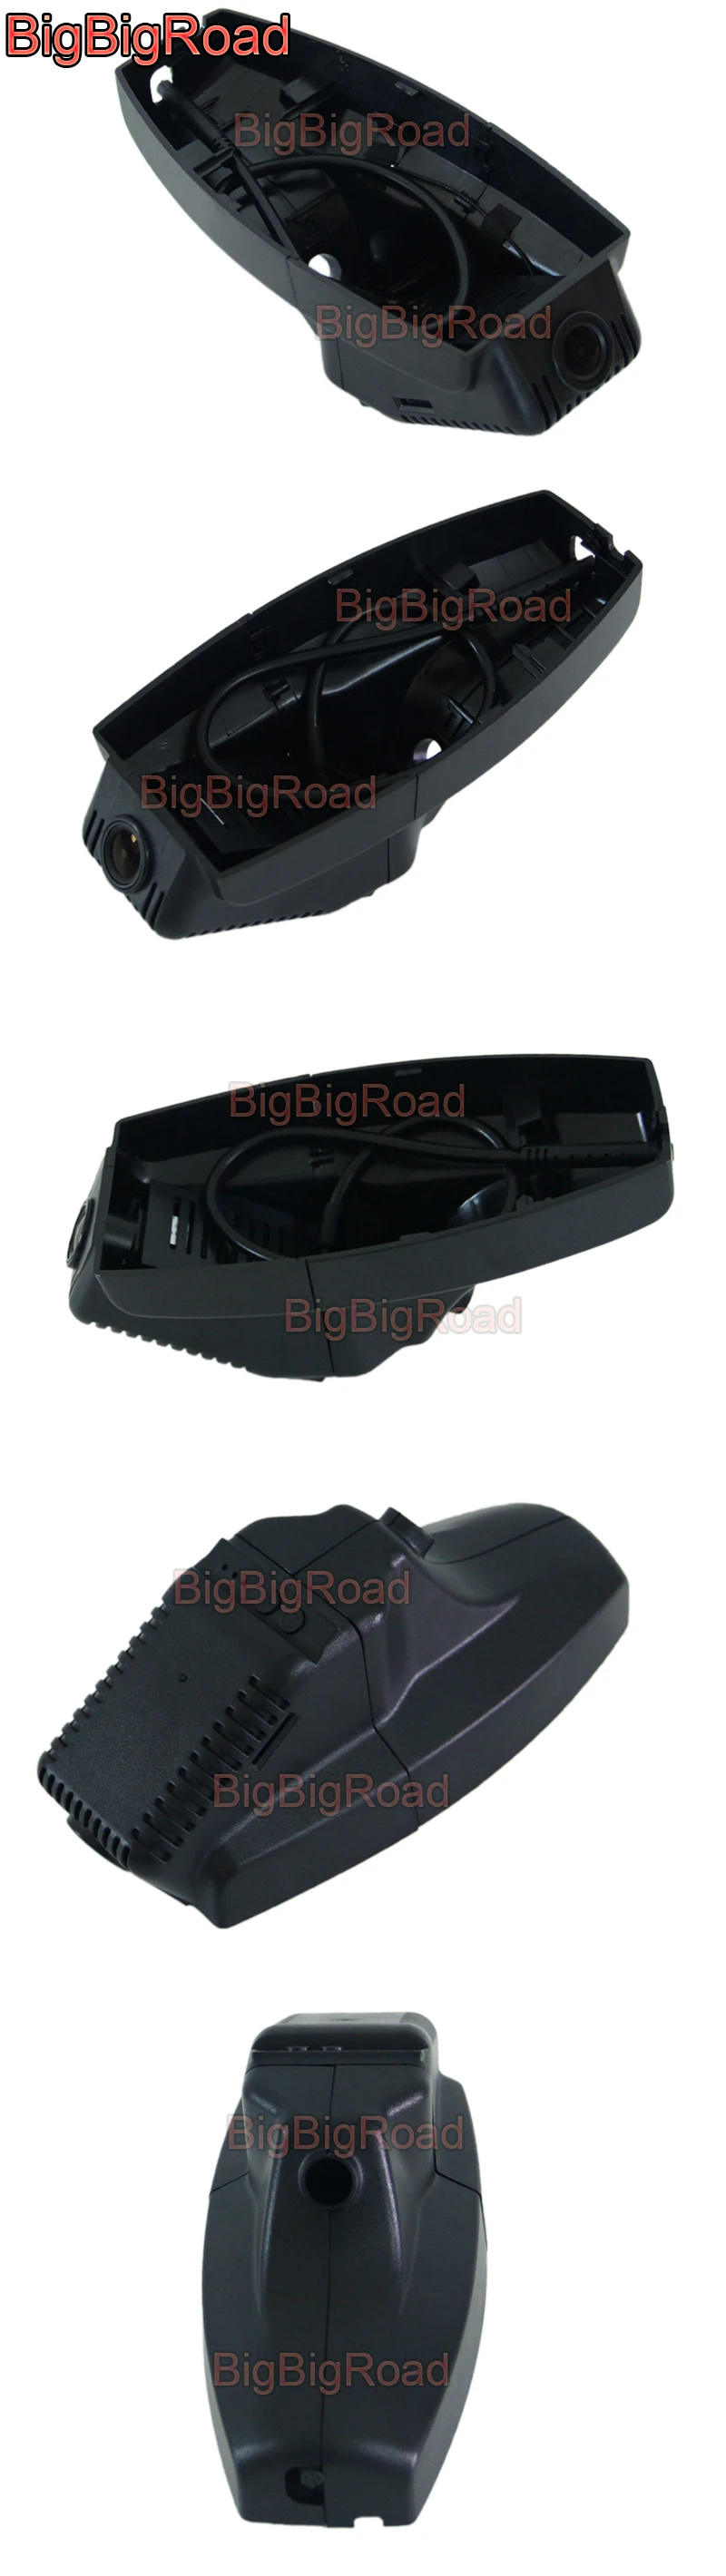 Автомобильный видеорекордер bigbigroad Wi-Fi видеокамера авторегистратор для BMW 3 5 7X1 E84 F15 X5 X6 X3 E71 E72 F25 E46 E90 E91 E92 E83 E87 120i 320i